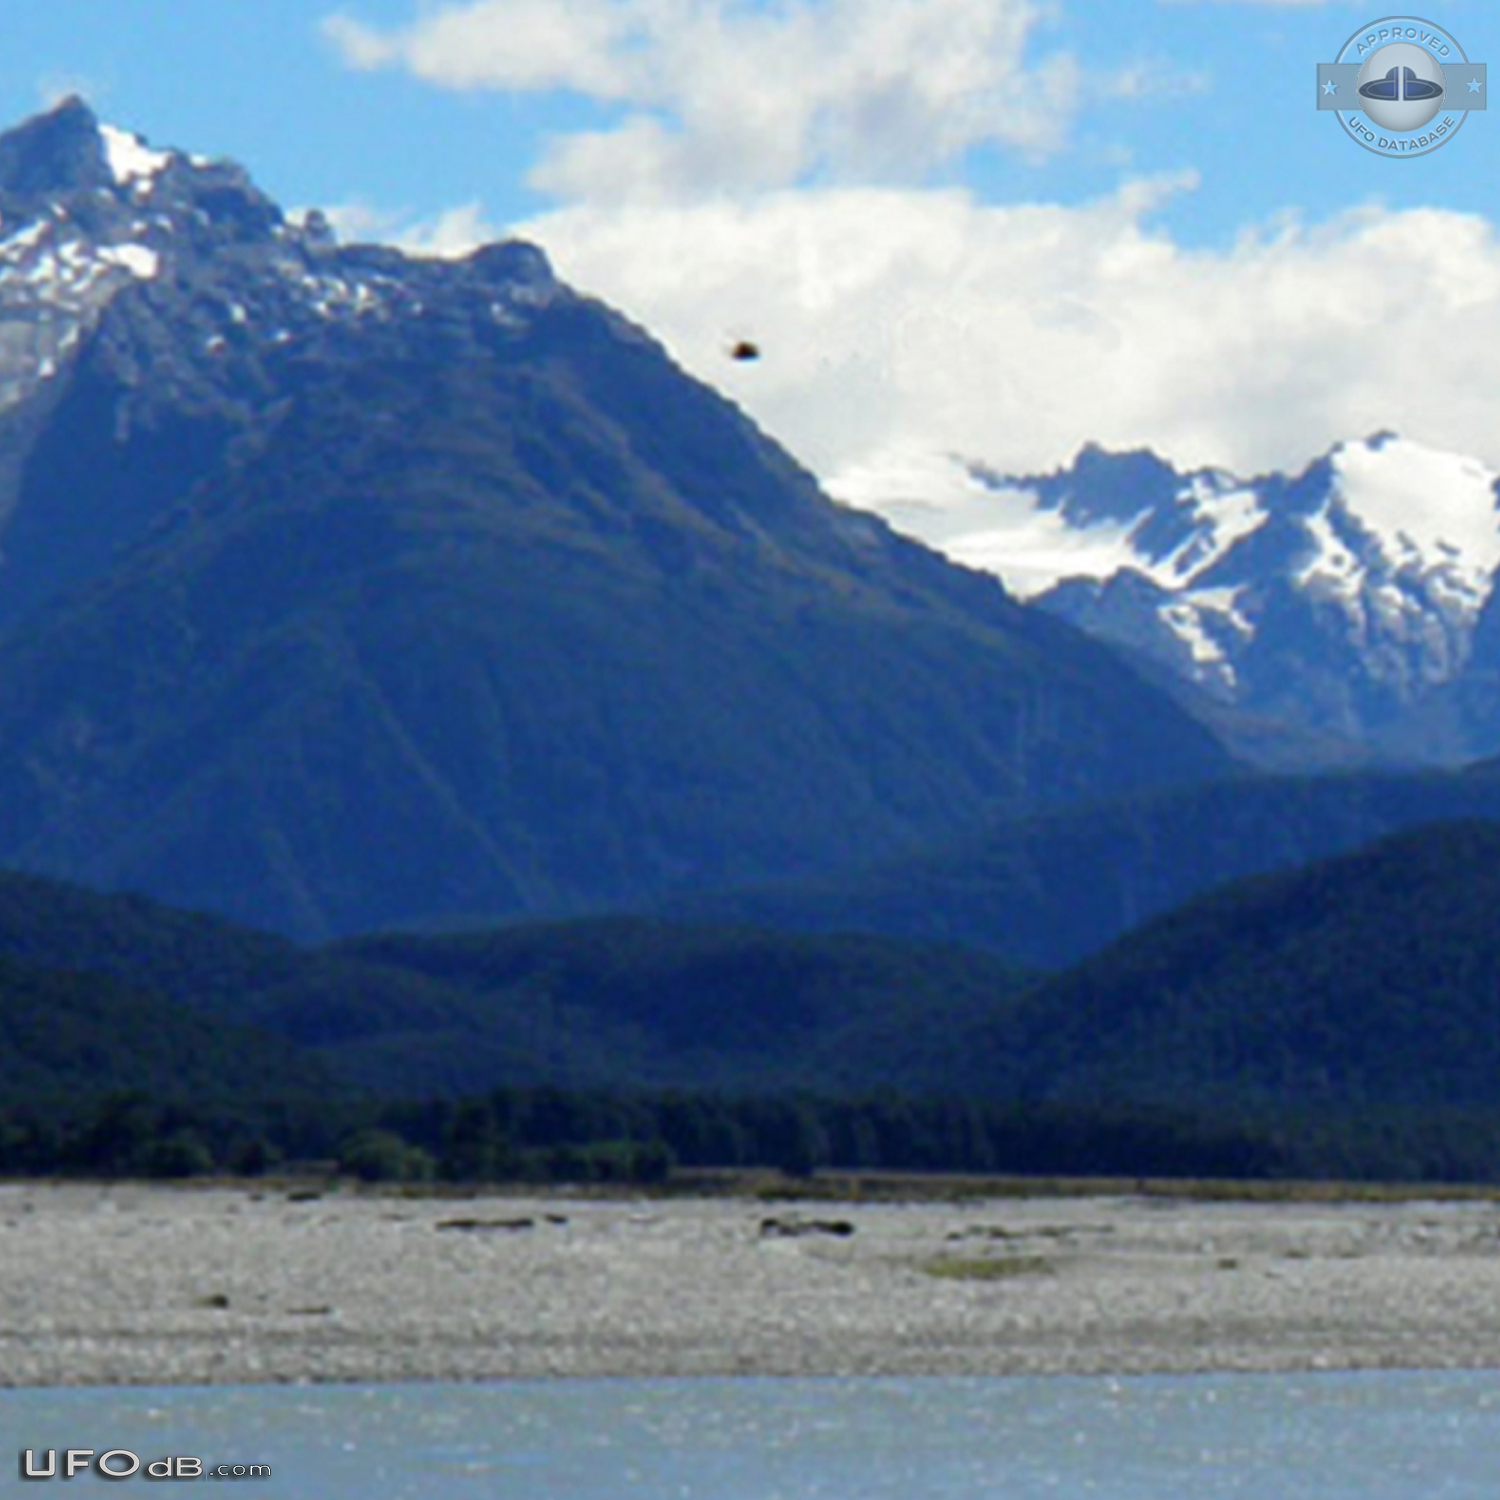 UFO sighting near Humboldt Mountains Glenorchy New Zealand 2015 UFO Picture #662-2